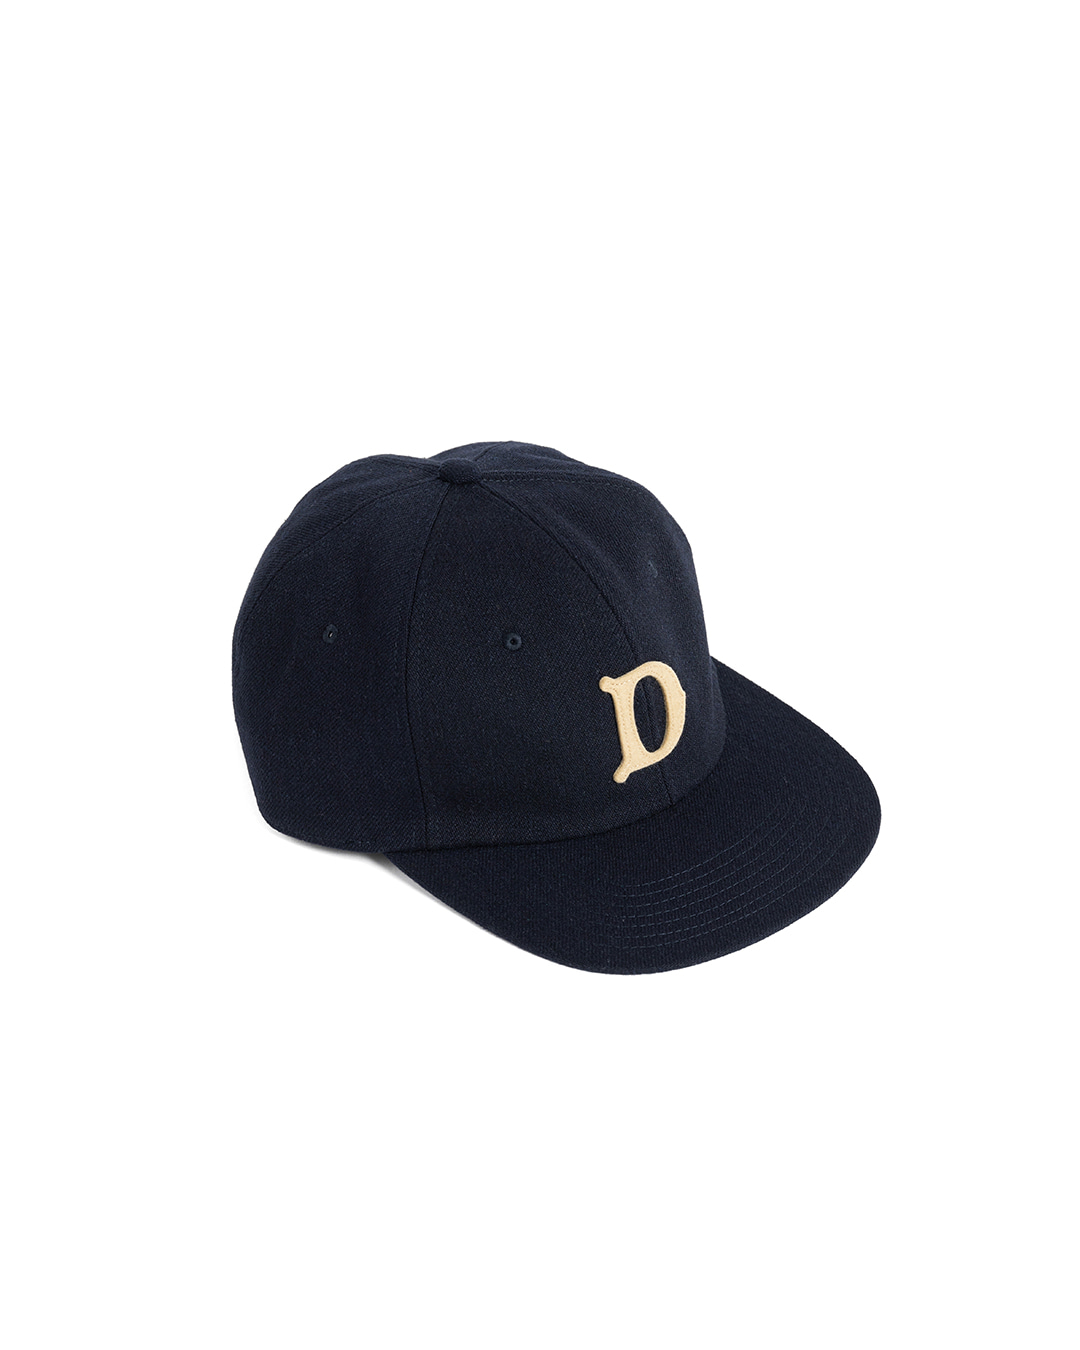 BASEBALL CAP (navy)